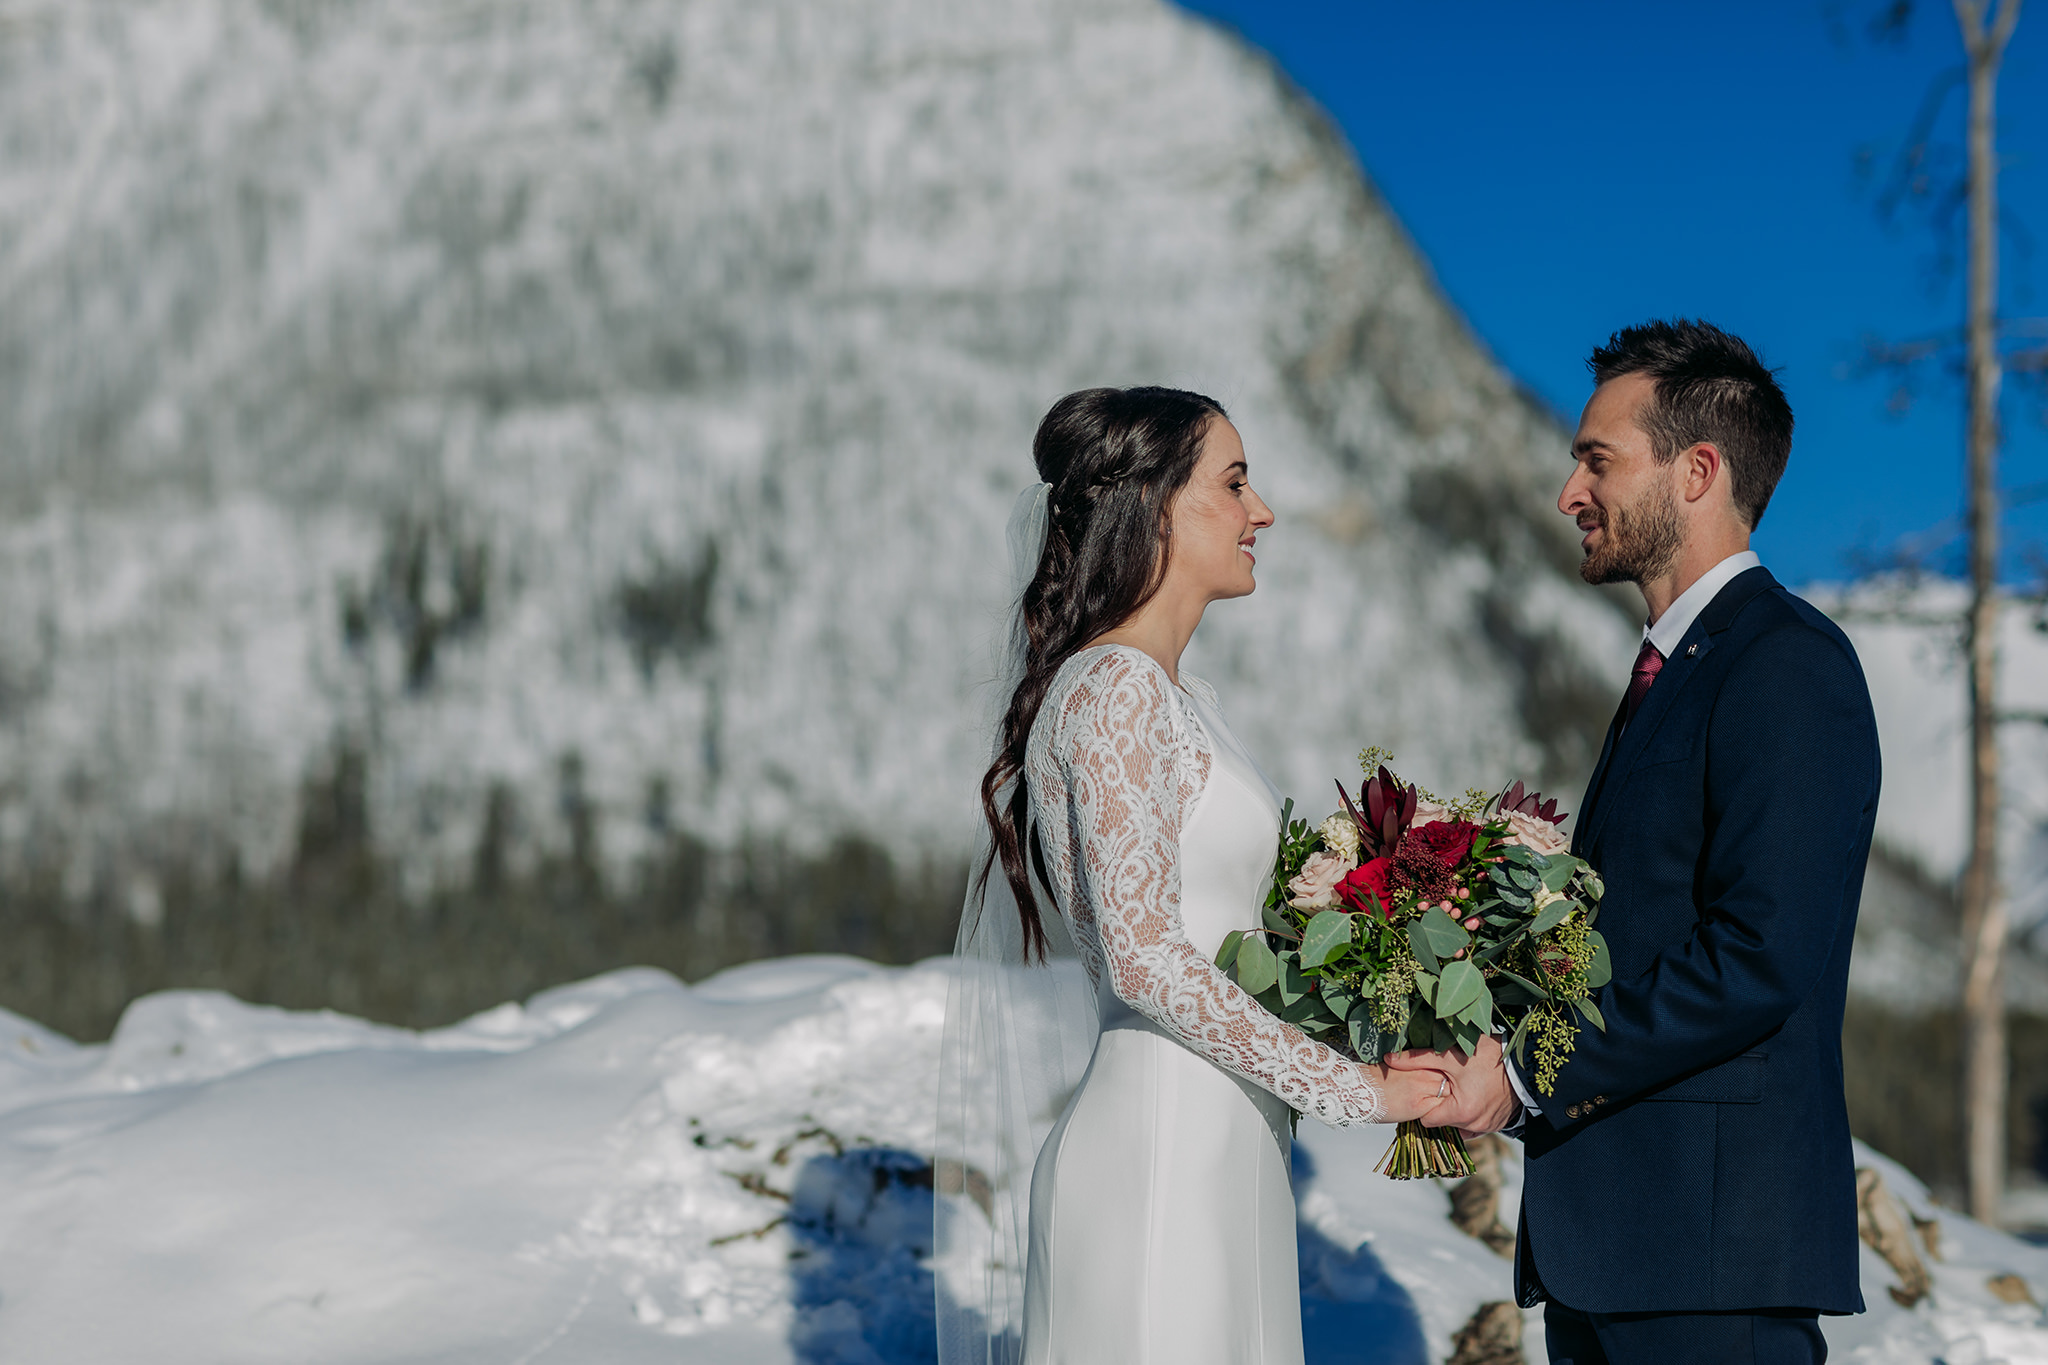 Lake Minnewanka Winter wedding in Banff with outdoor ceremony